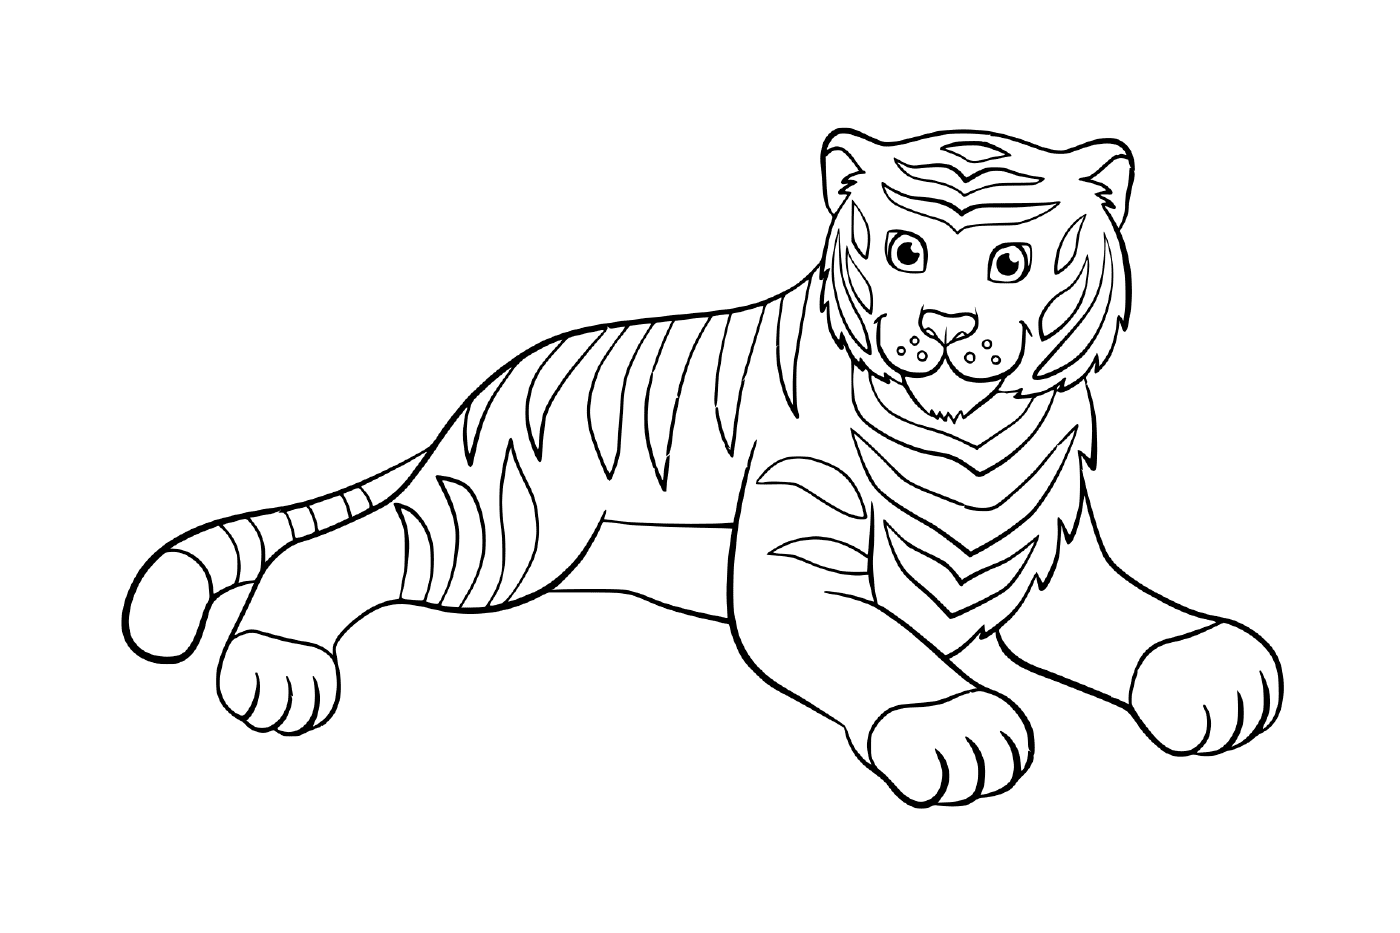   un tigre se reposant adorablement 